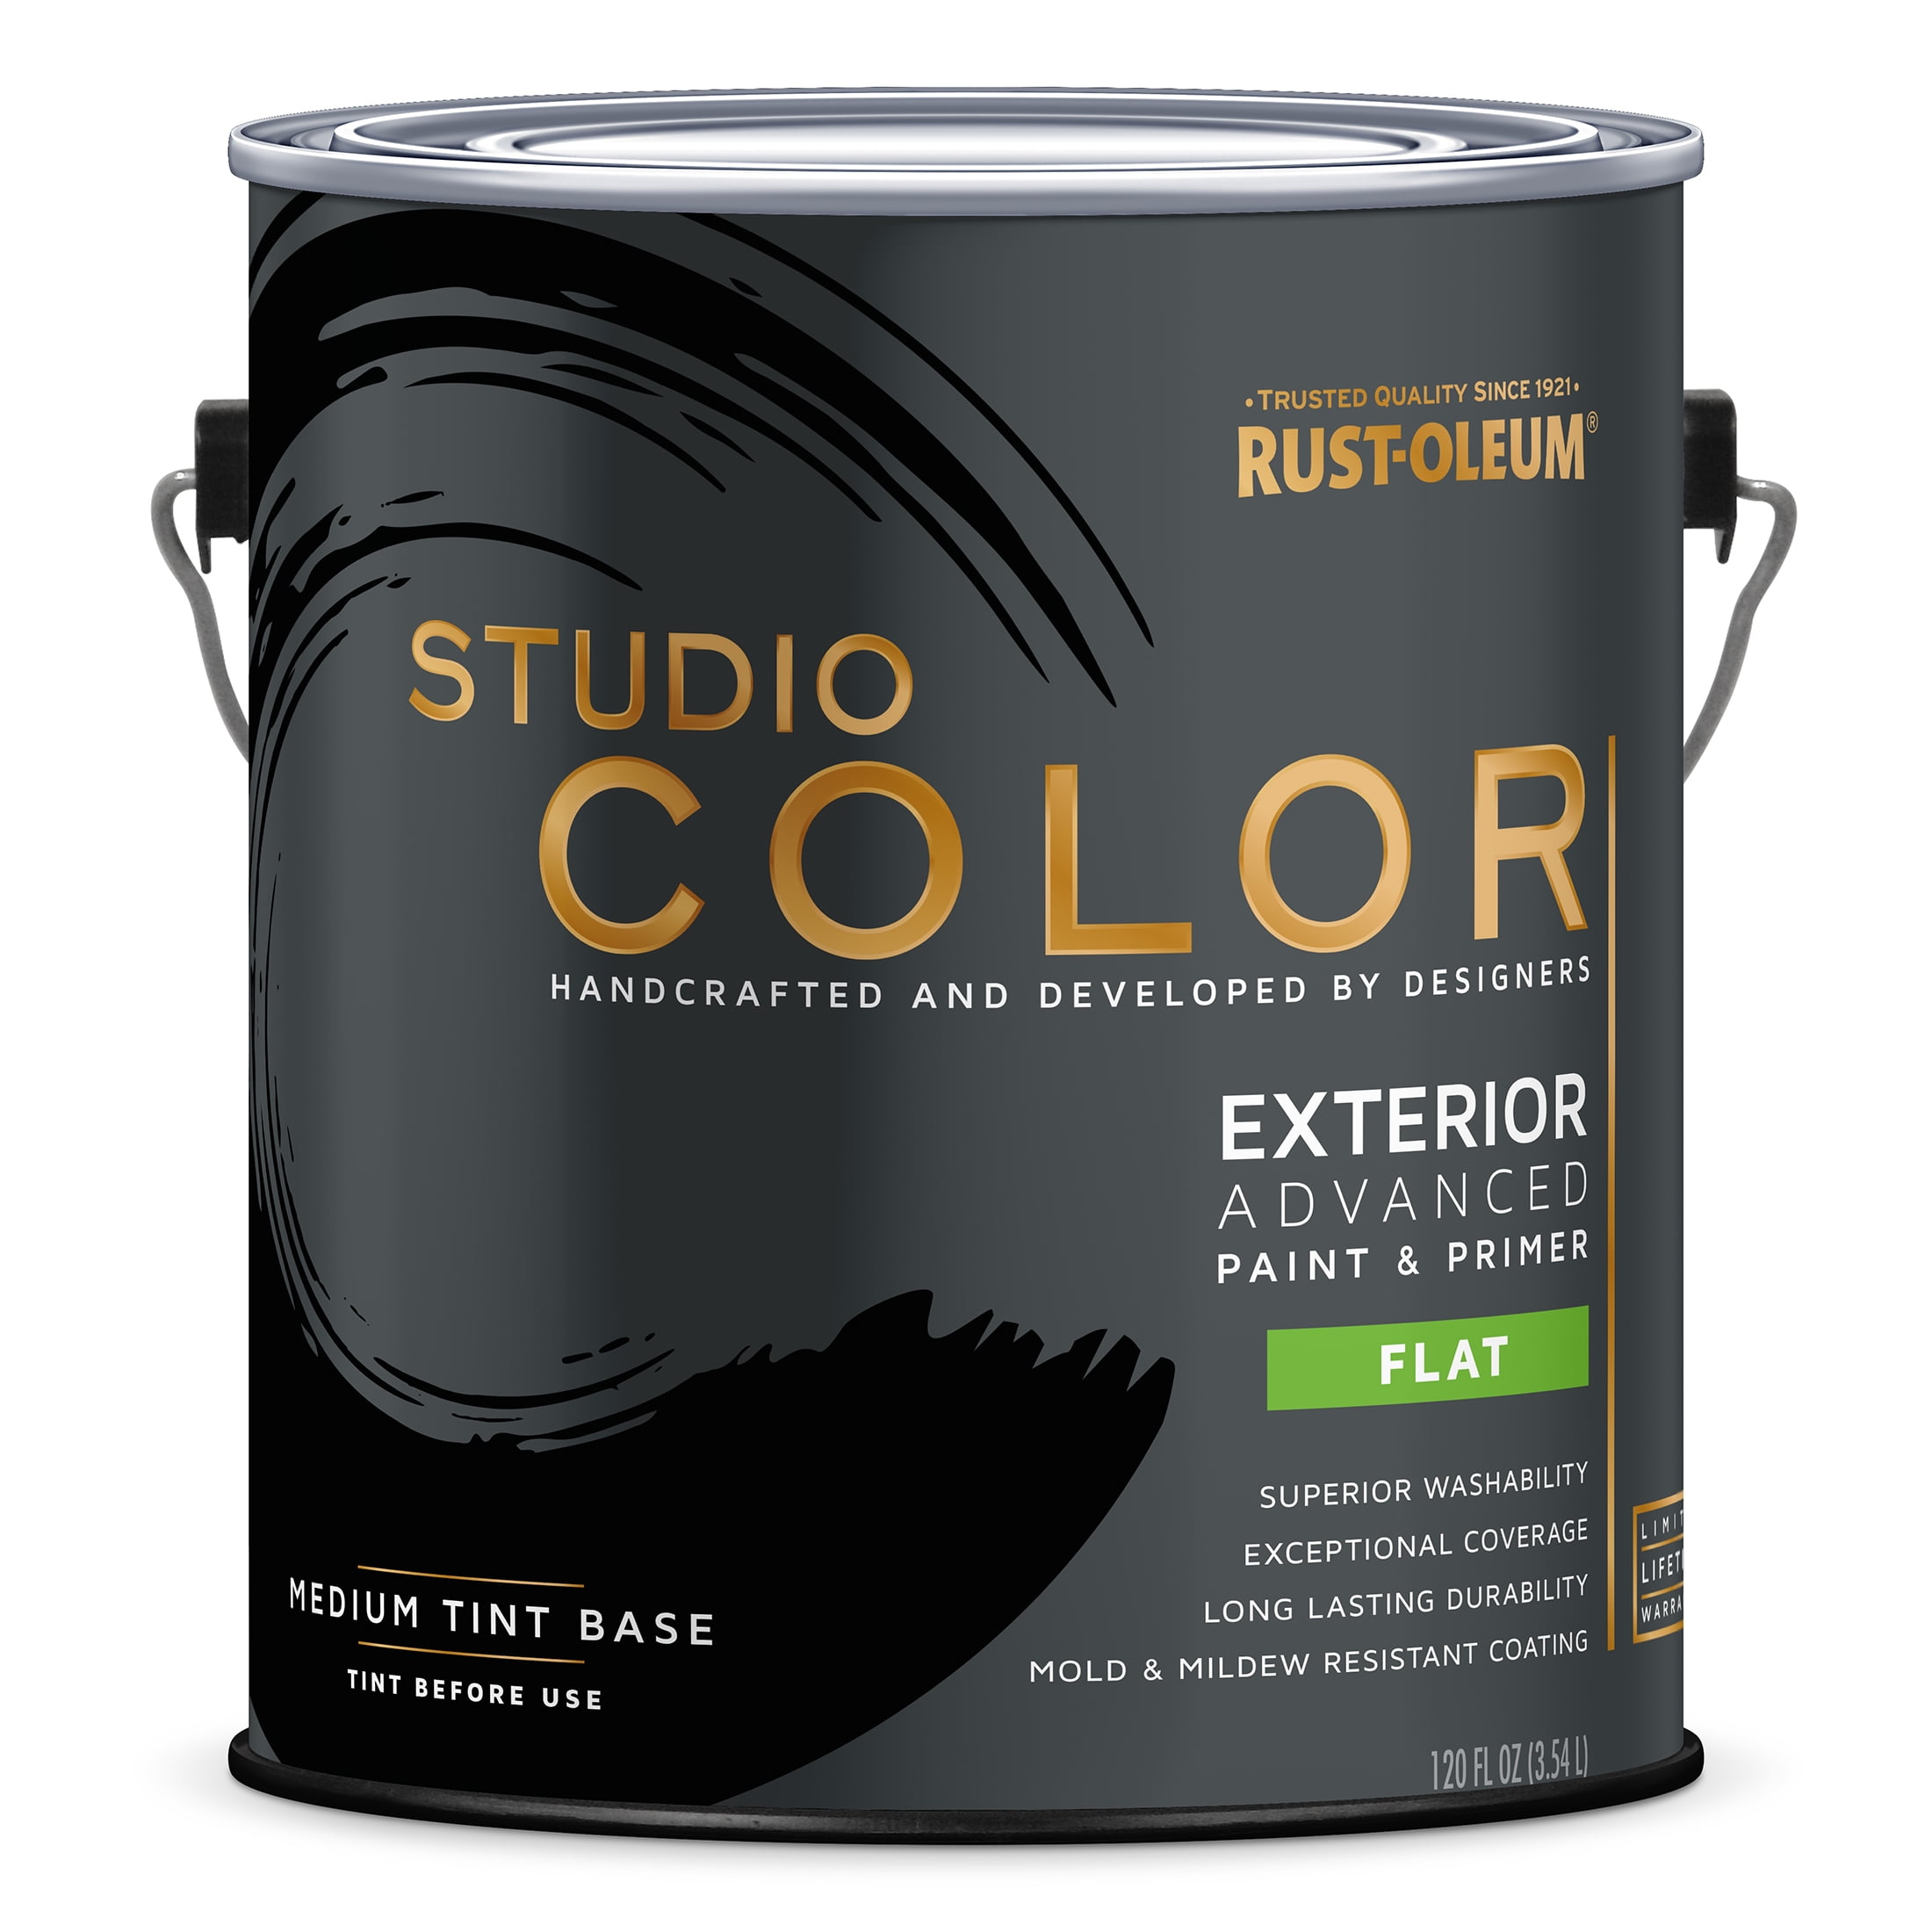 Medium Base, Rust-Oleum Studio Color Advanced Paint + Primer Exterior Flat, Gallon